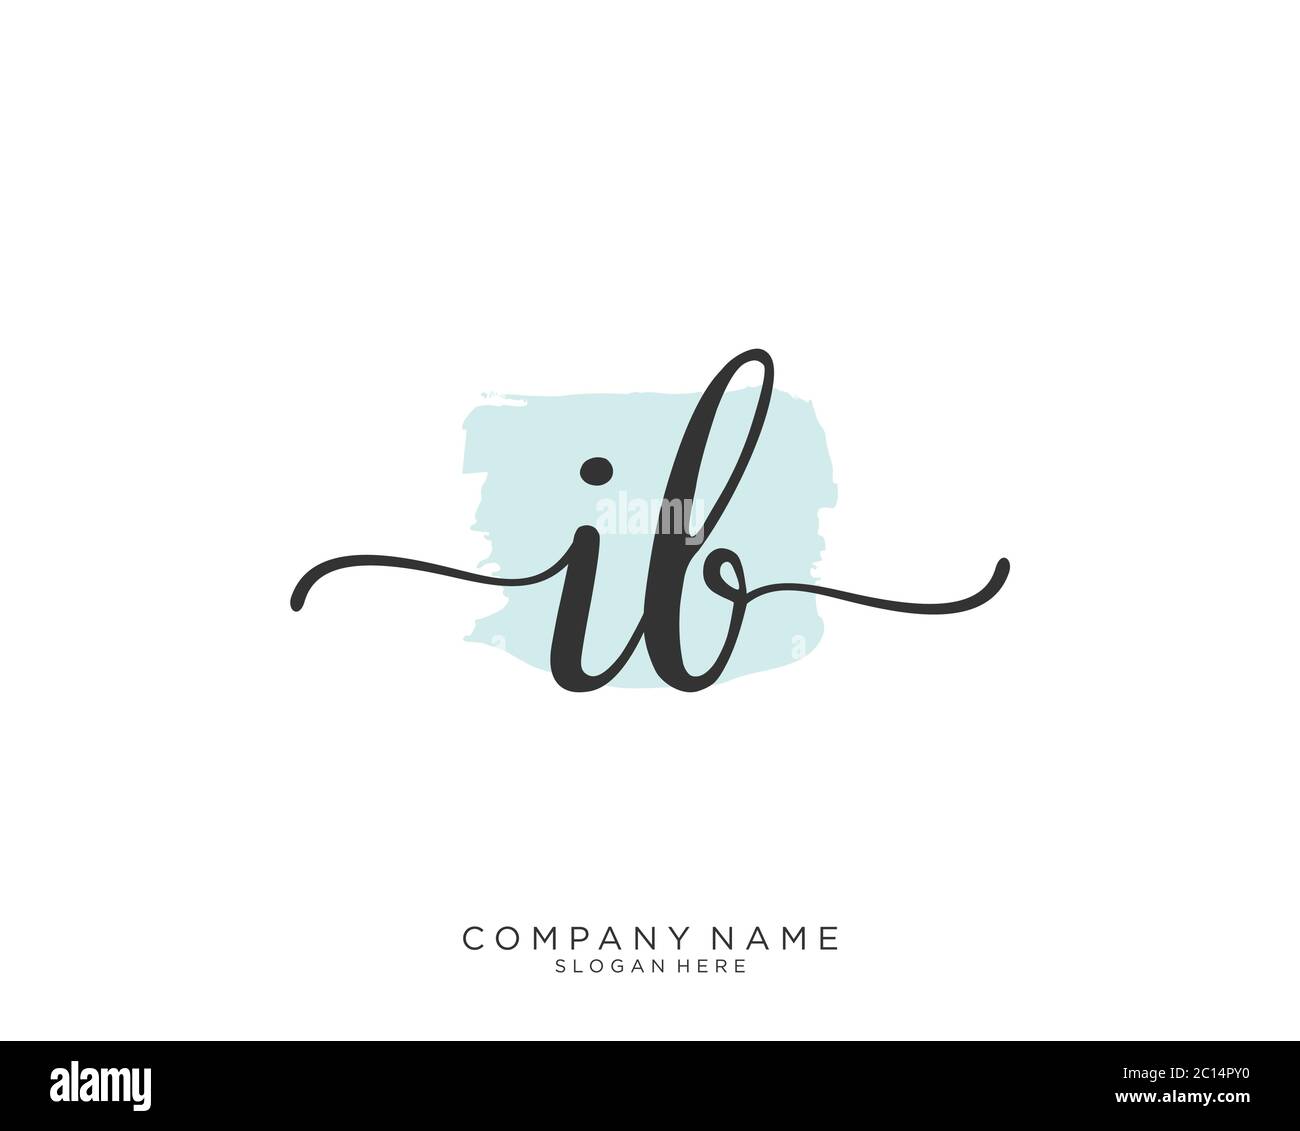 IB Initial handwriting logo vector Stock Vector